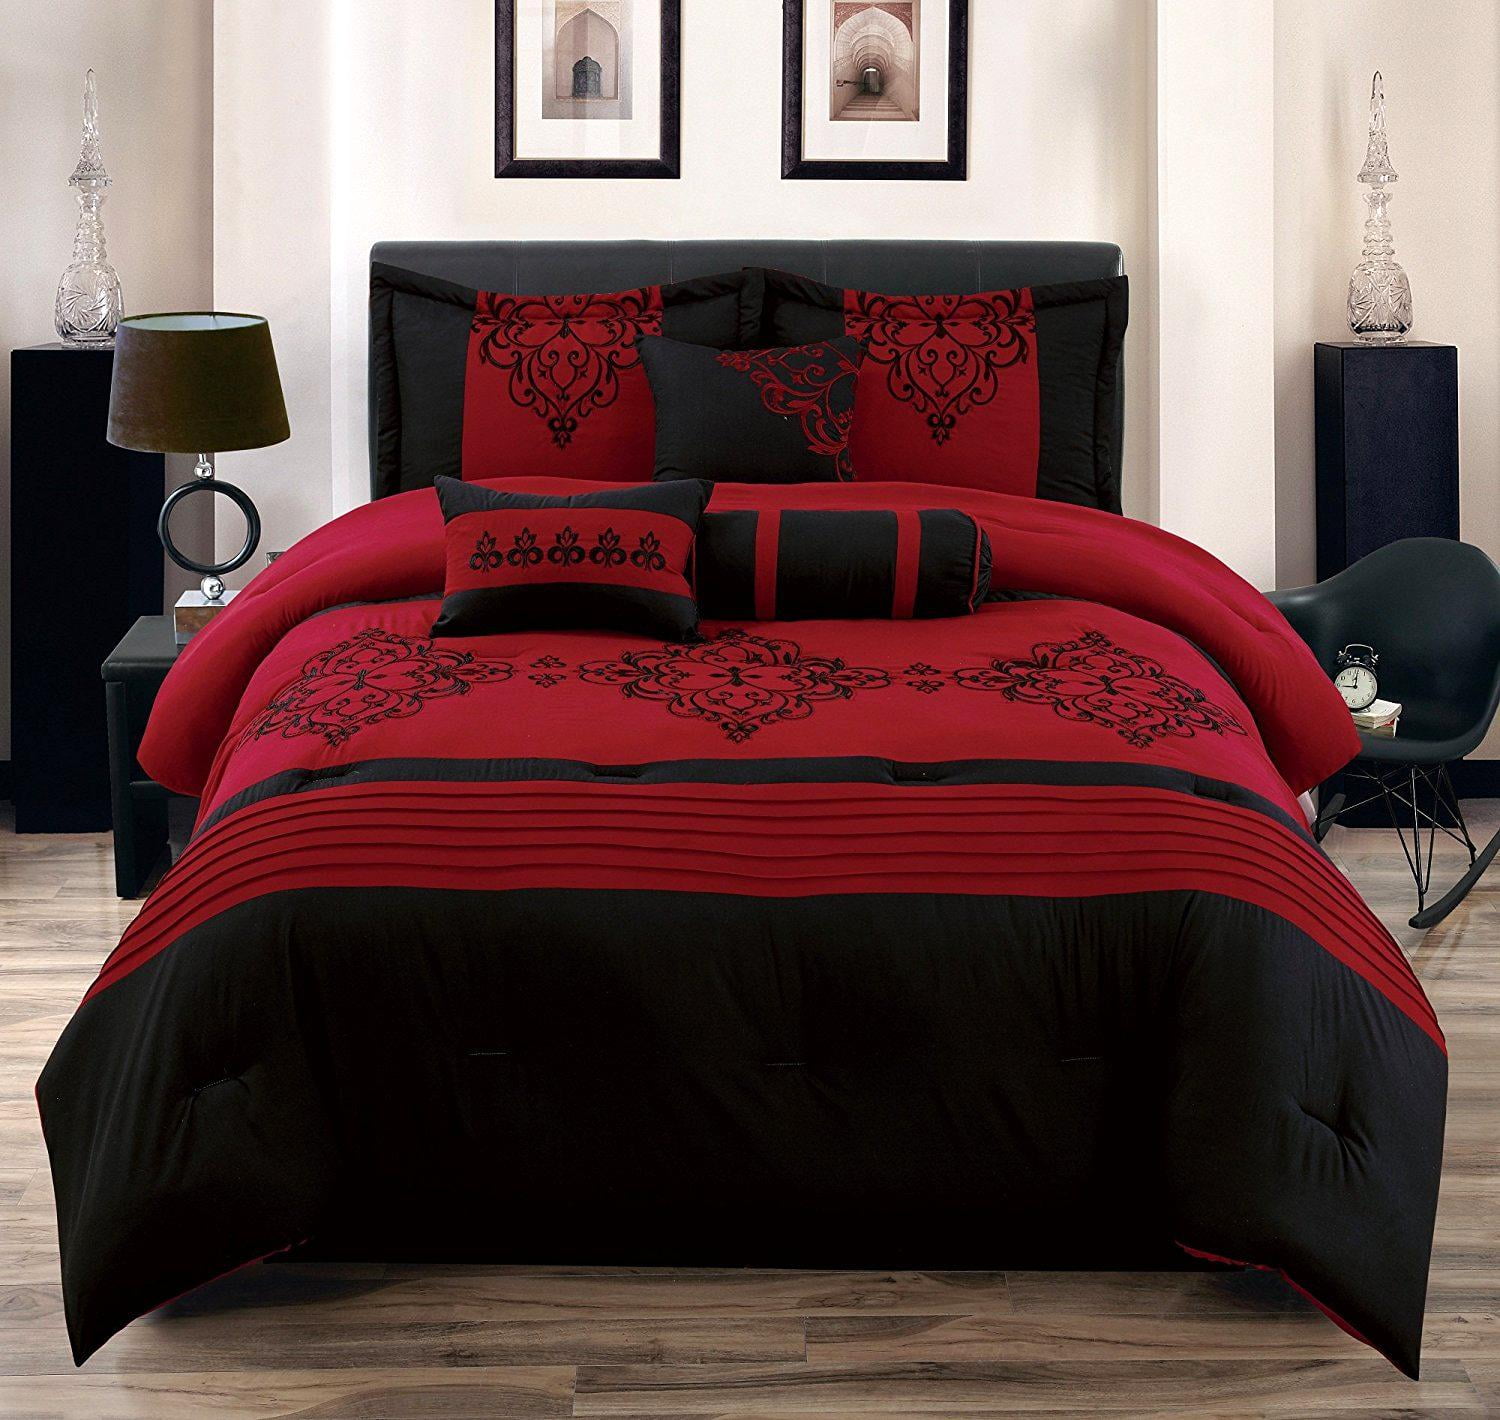 Heba Queen Size 7-Piece Comforter Set Red & Black Bed in a Bag Over